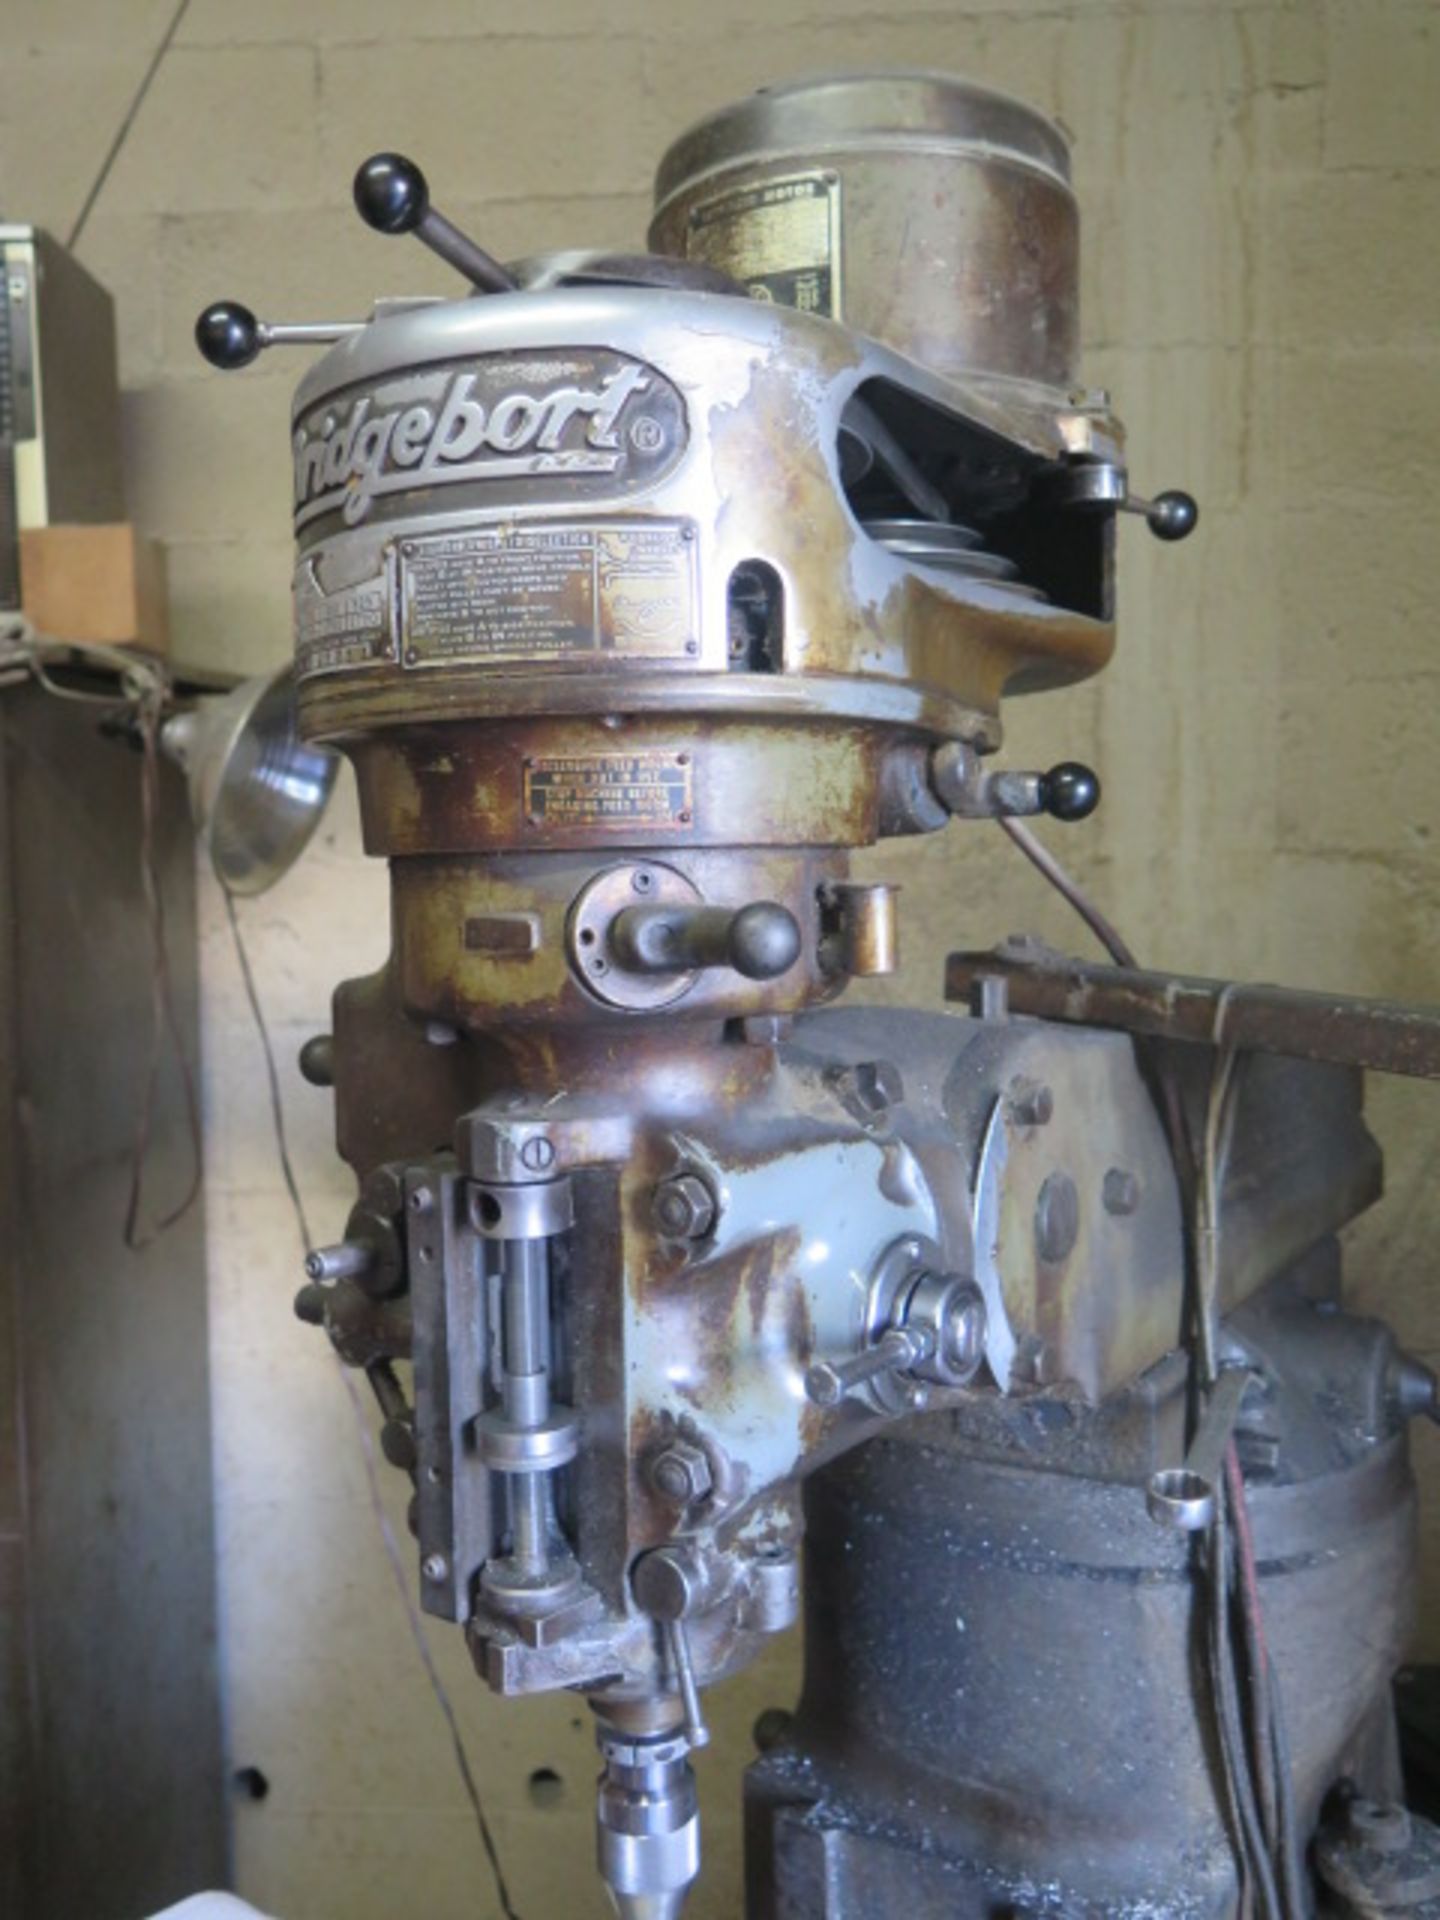 Bridgeport Vertical Mill s/n 52373 w/ Sargon DRO, 1Hp Motor, 80-2720 RPM, 9” x 42” Table - Image 3 of 4